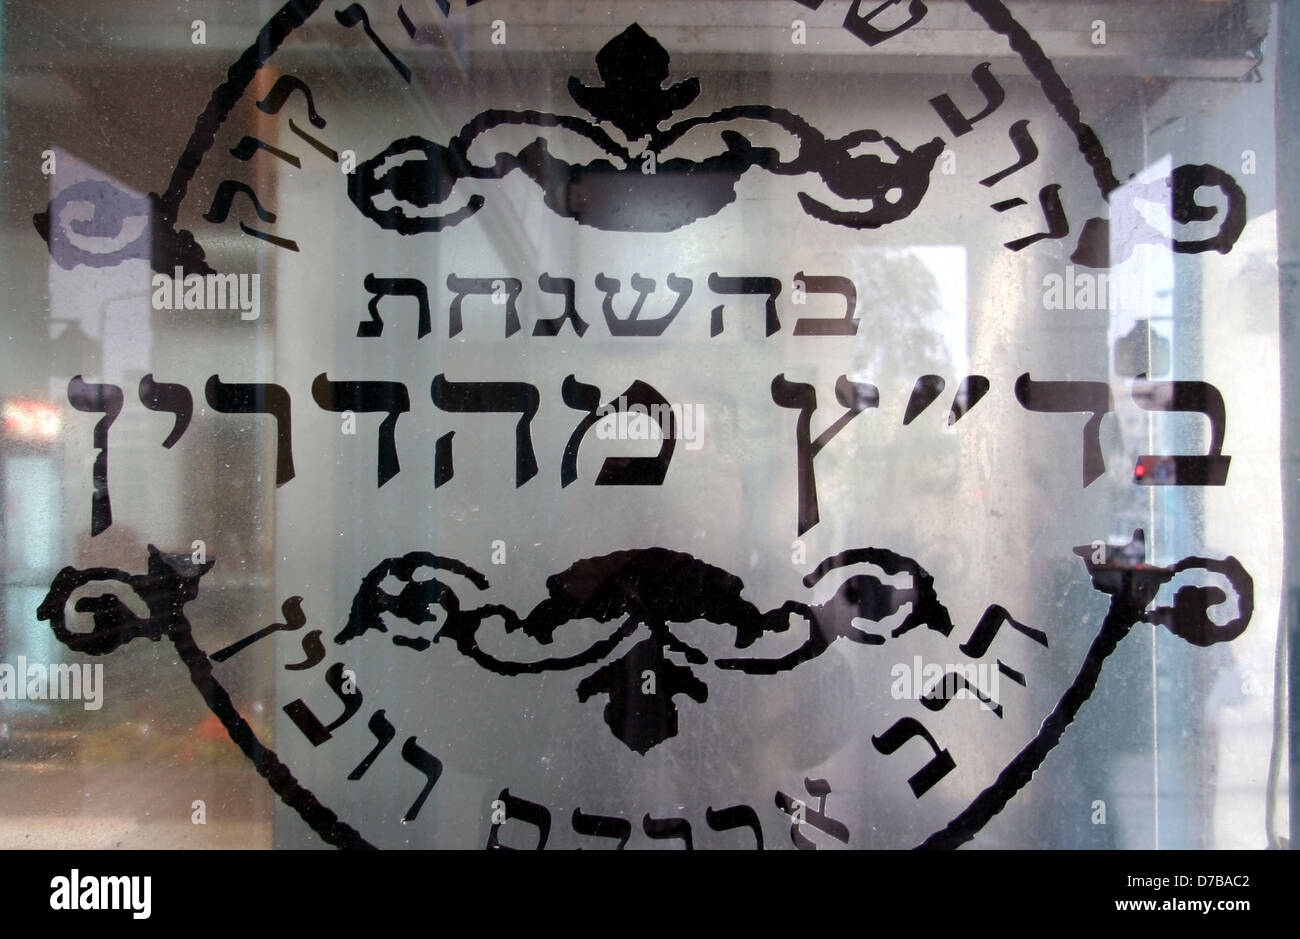 badatz religious endorsement of a business in jerusalem (2005) Stock Photo